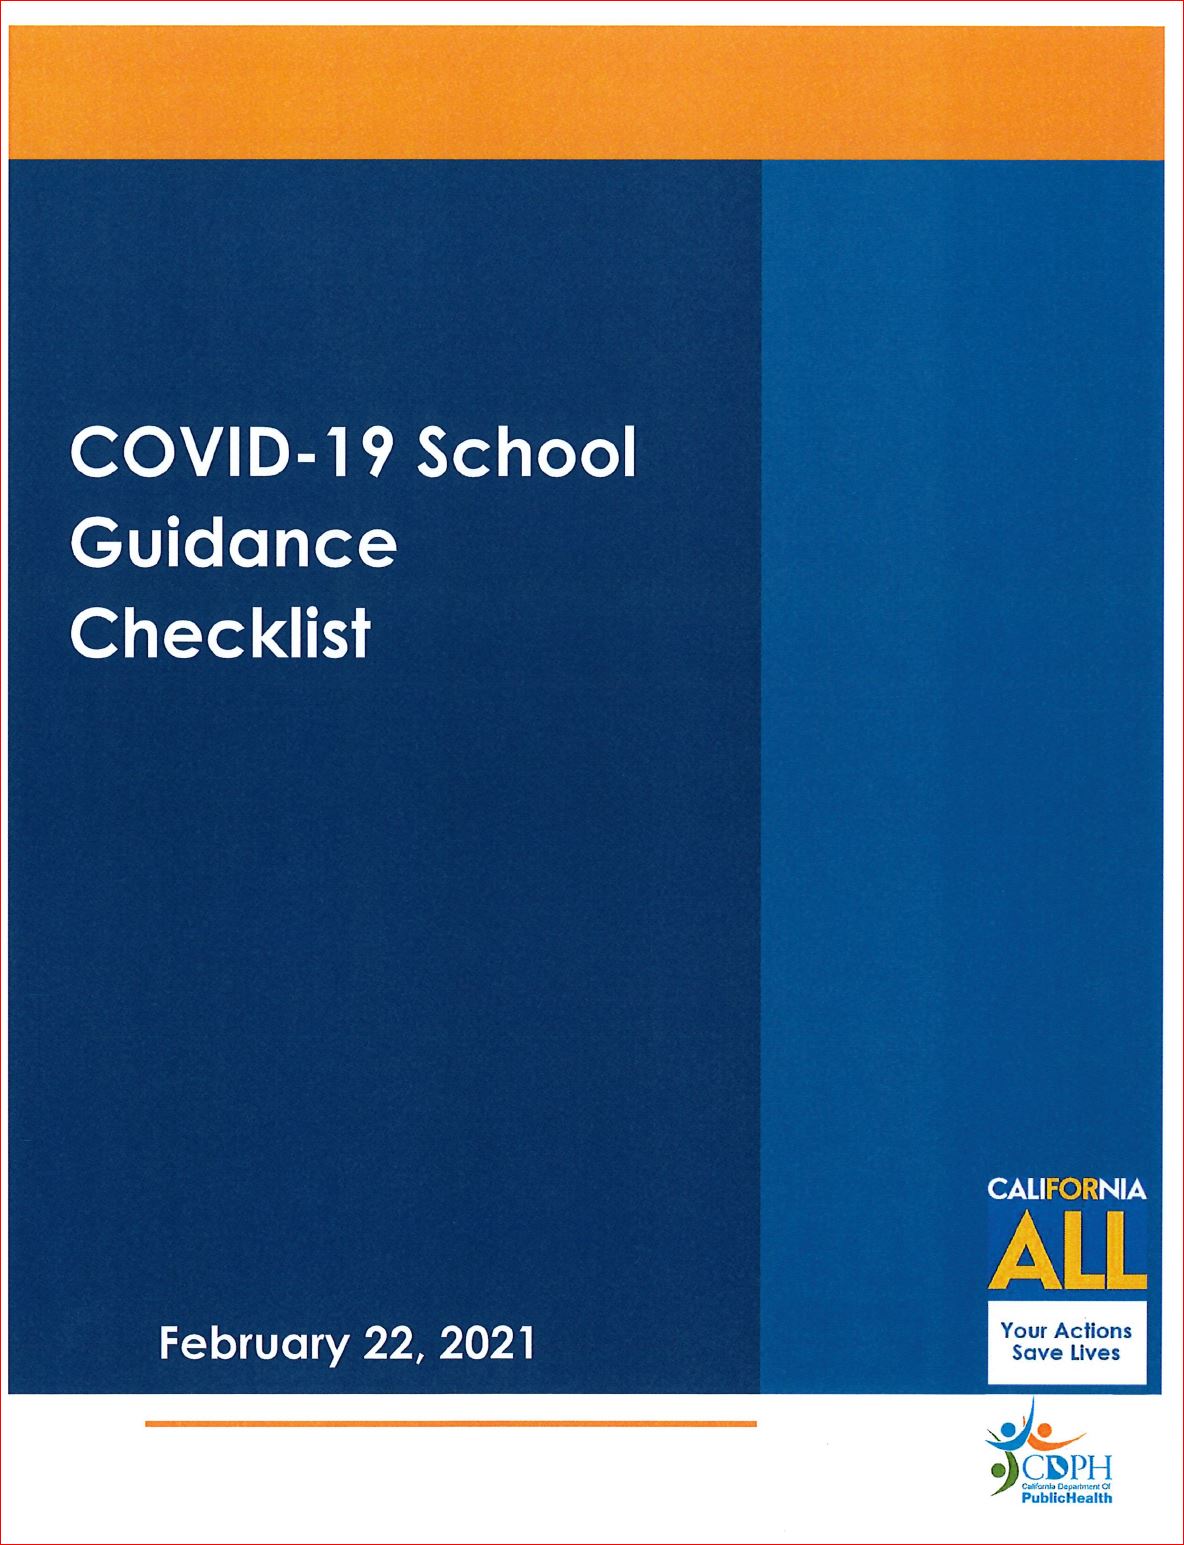 Link to COVID-19 School Guidance Checklist